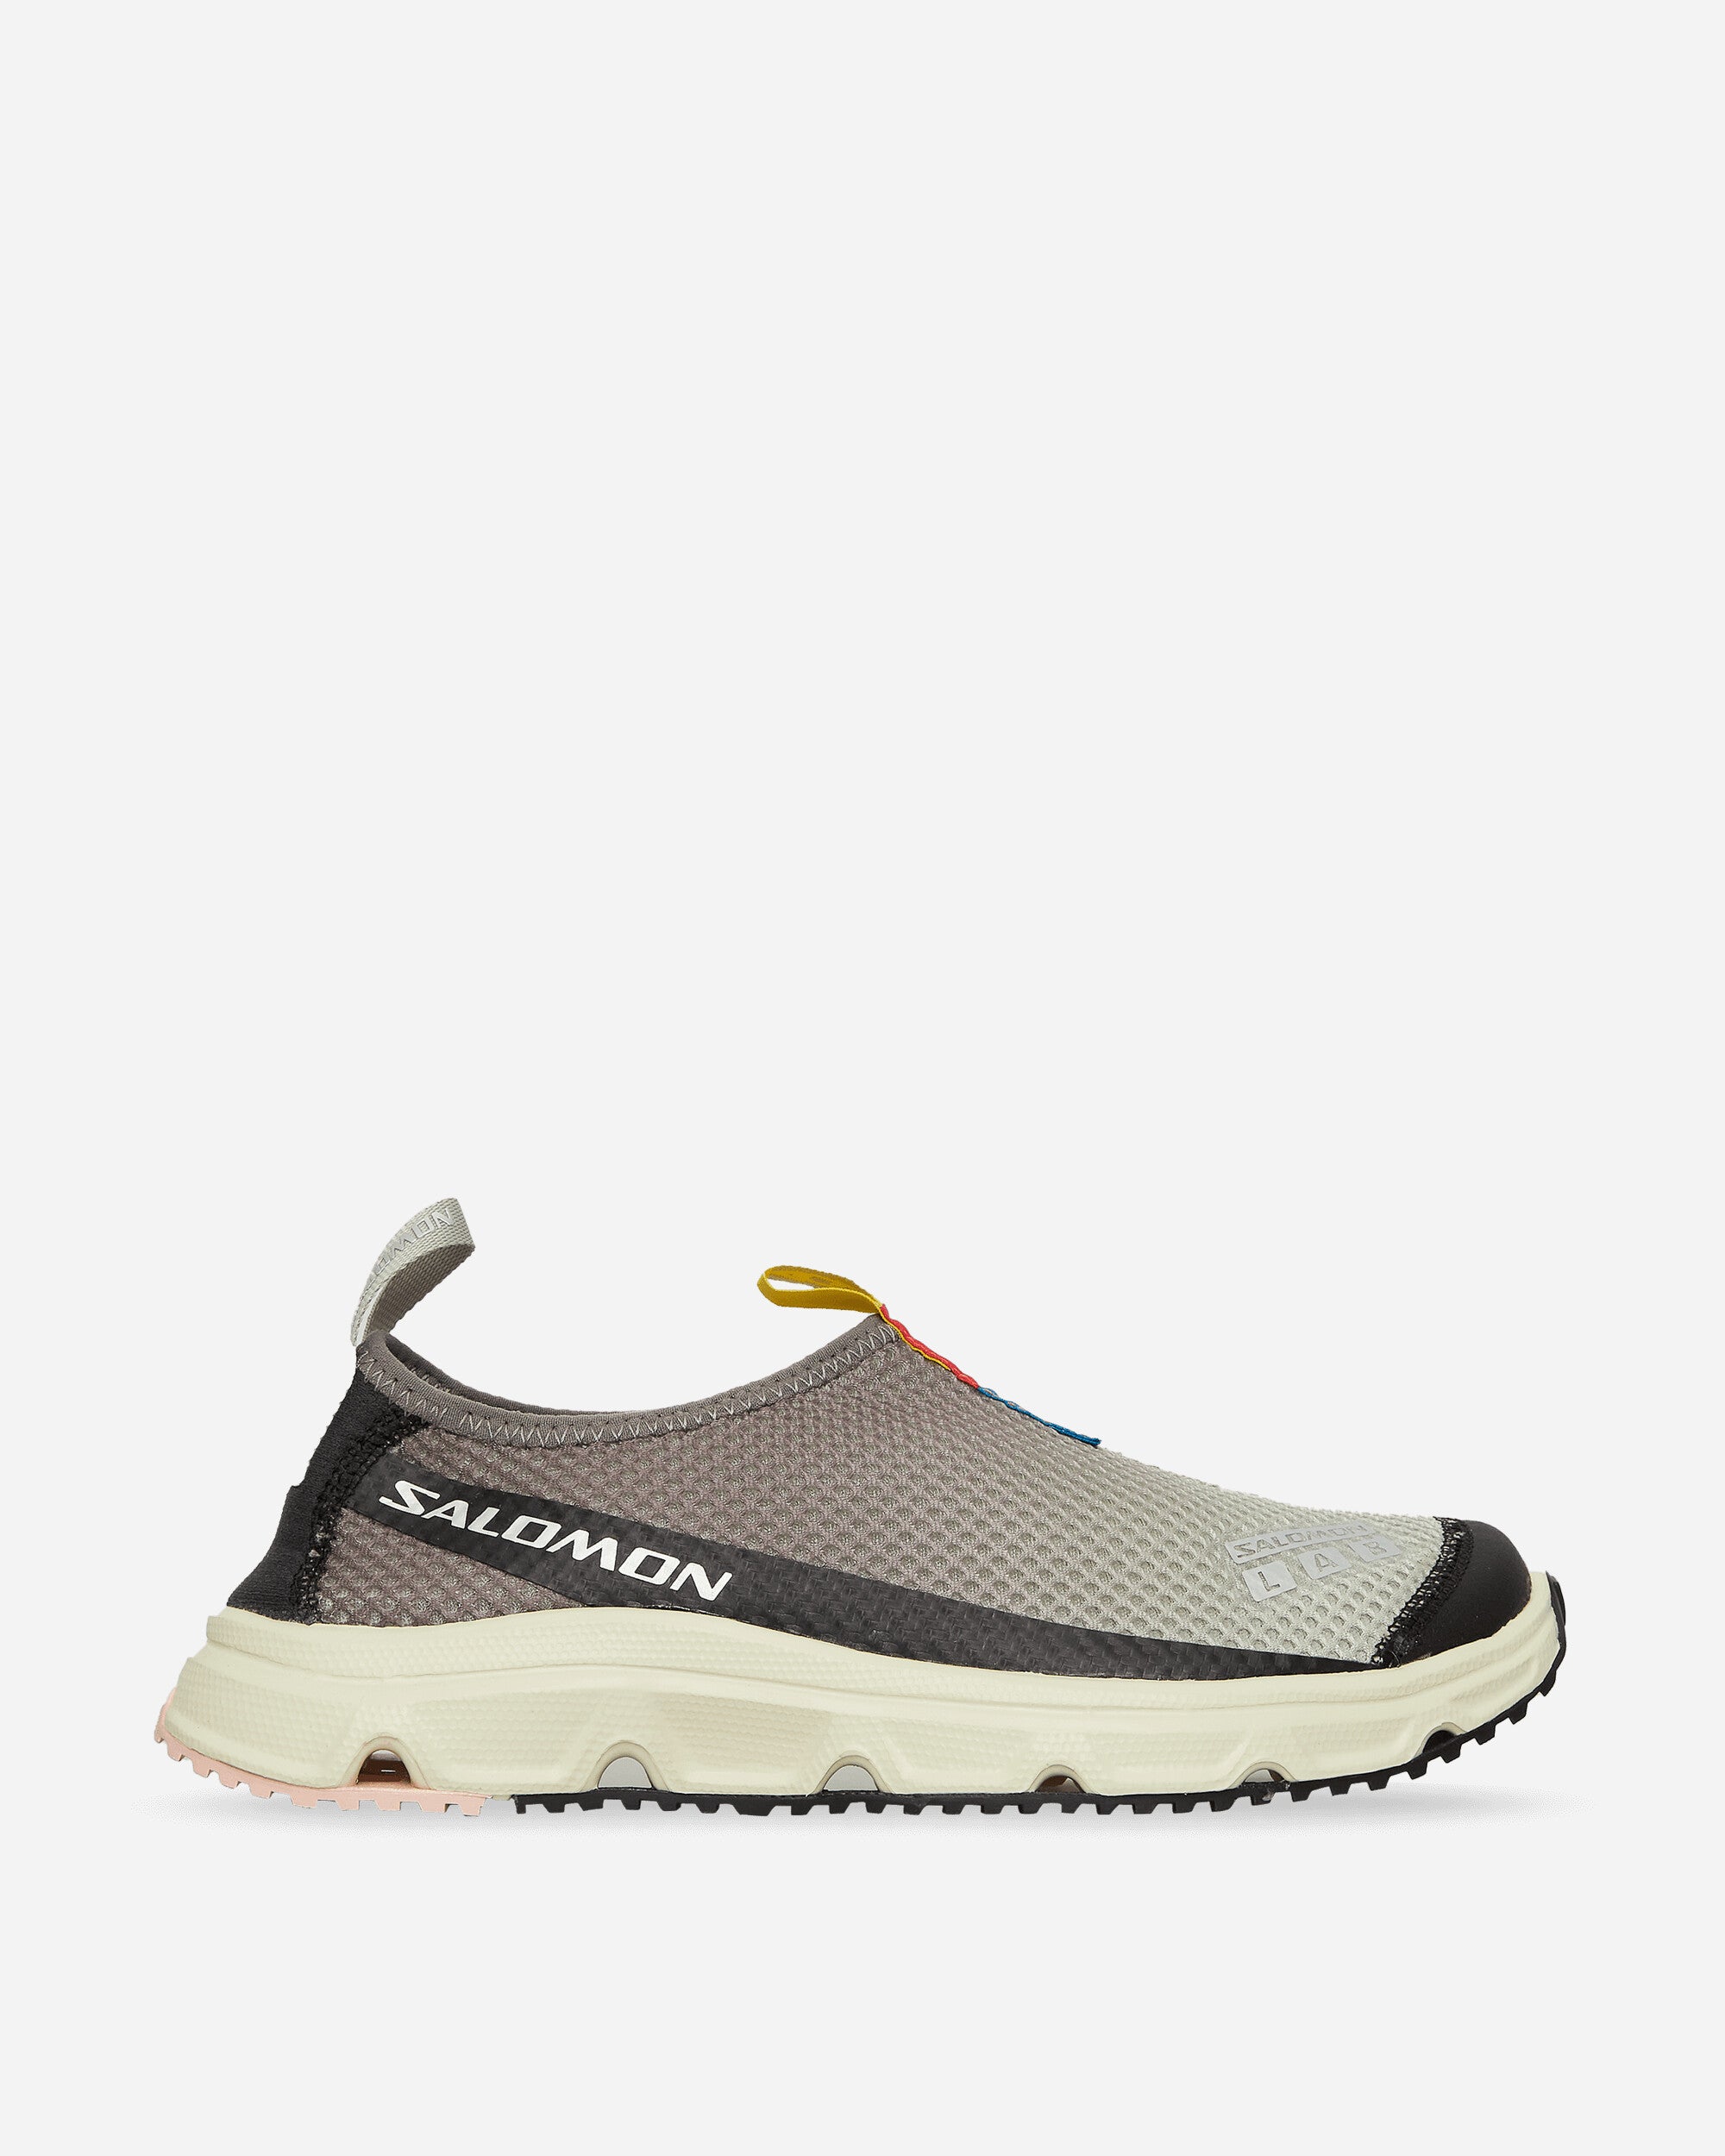 Salomon Rx Moc 3.0 Sneakers In Grey | ModeSens